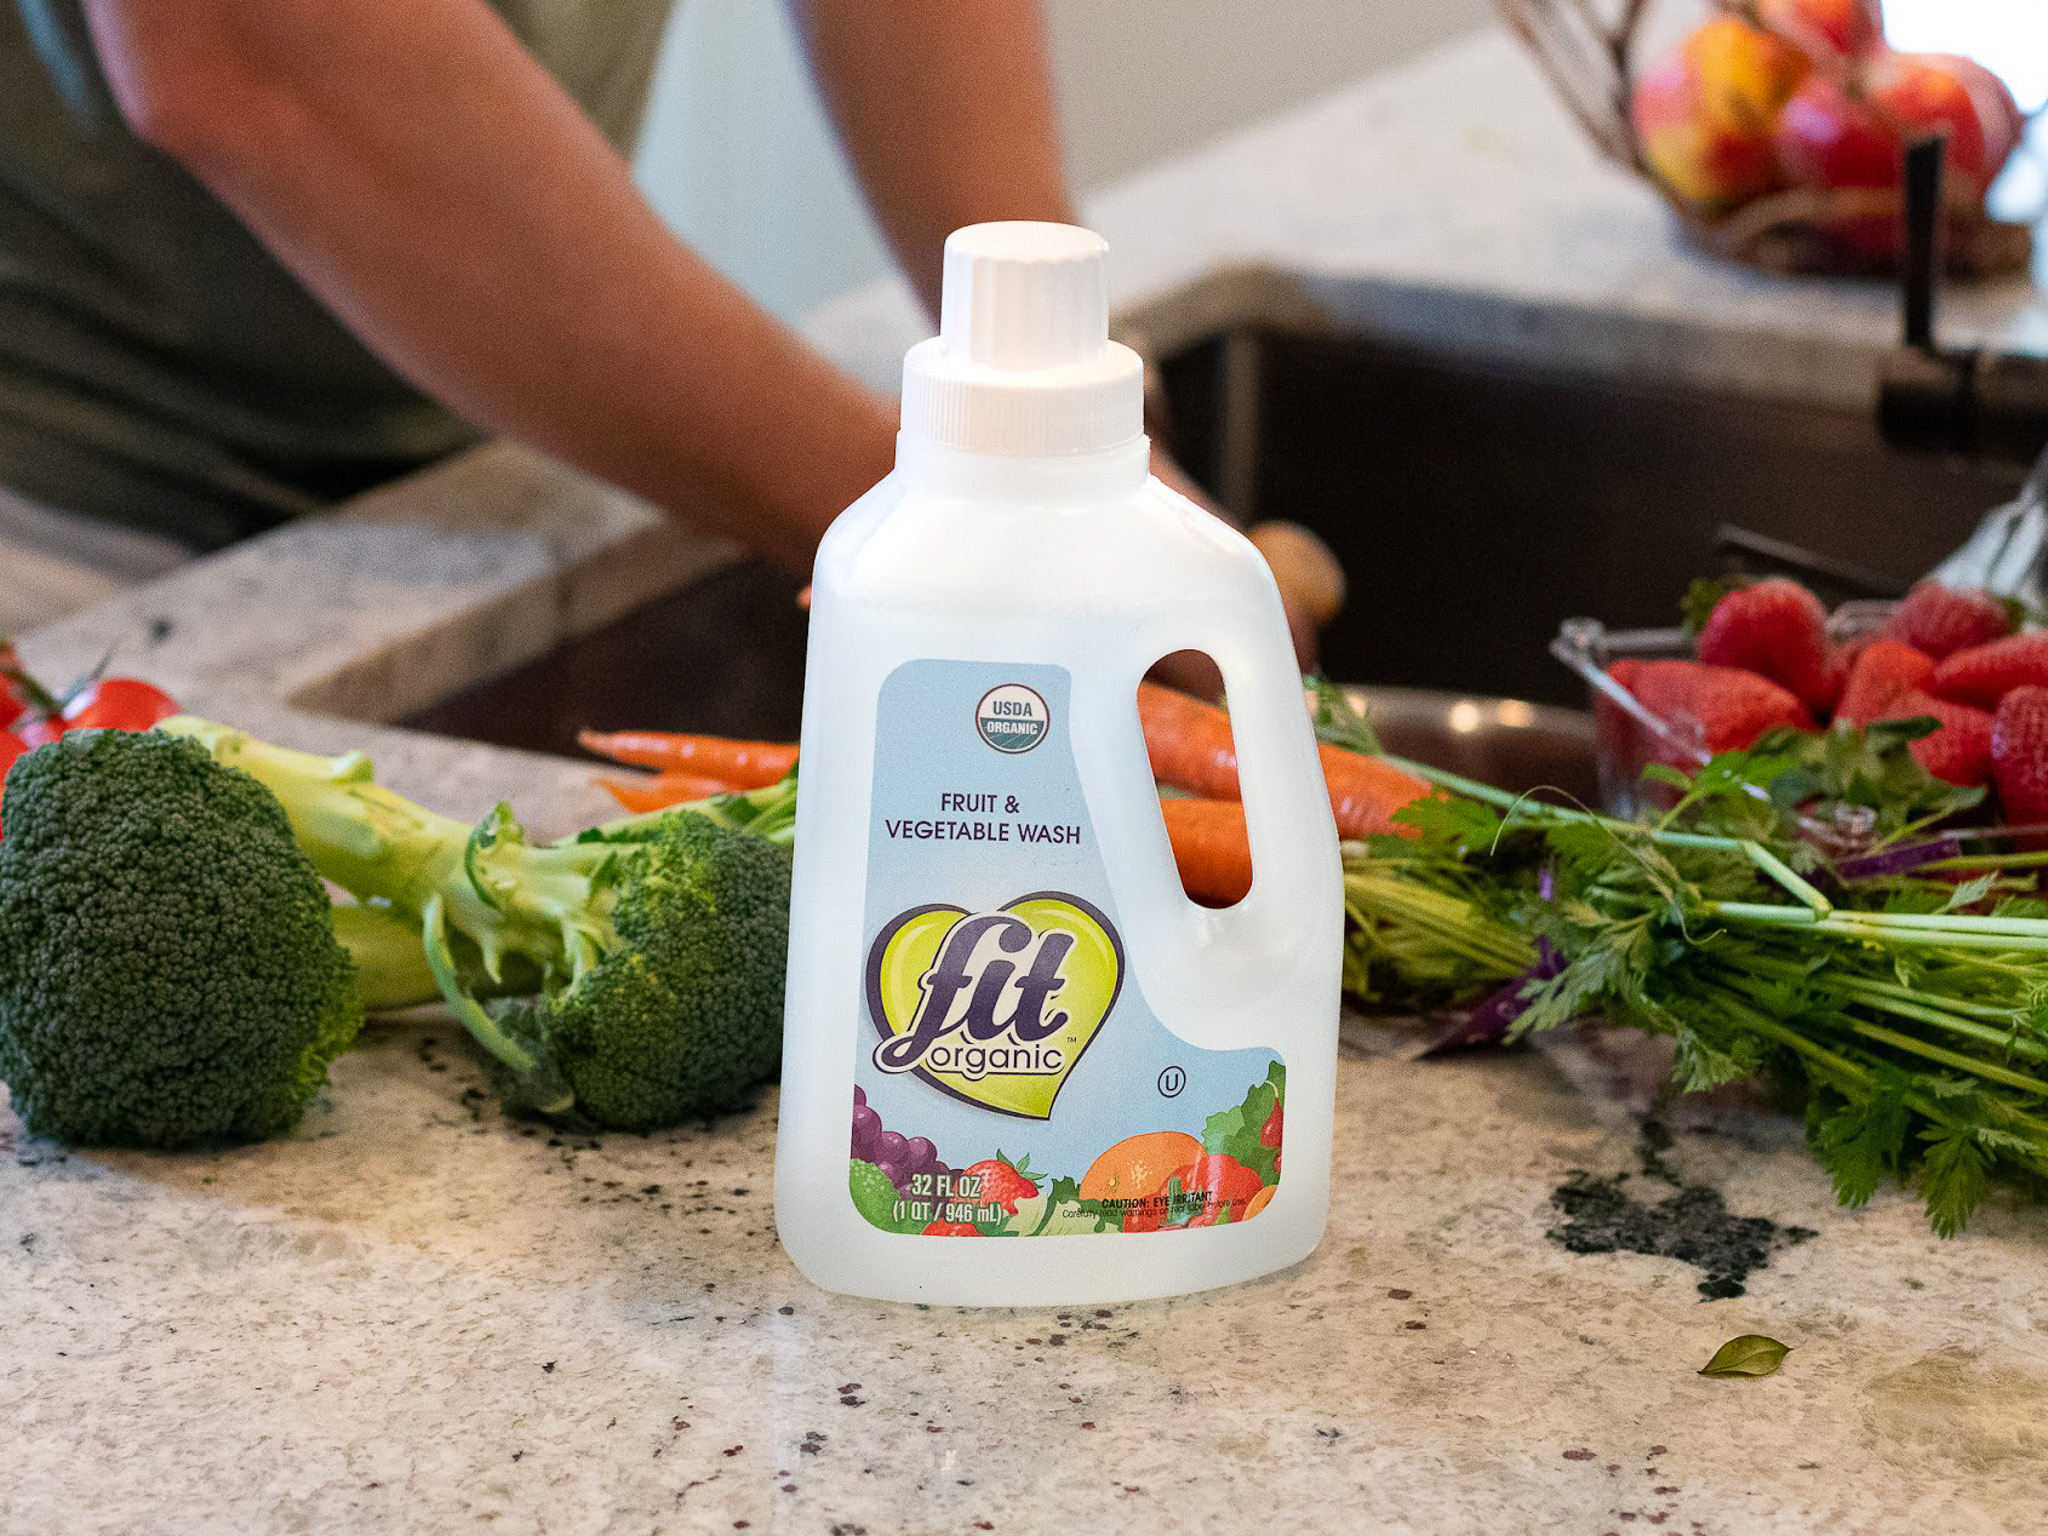 Fit Organic Fruit & Vegetable Wash Just $6.30 At Publix – Half Price! -  iHeartPublix